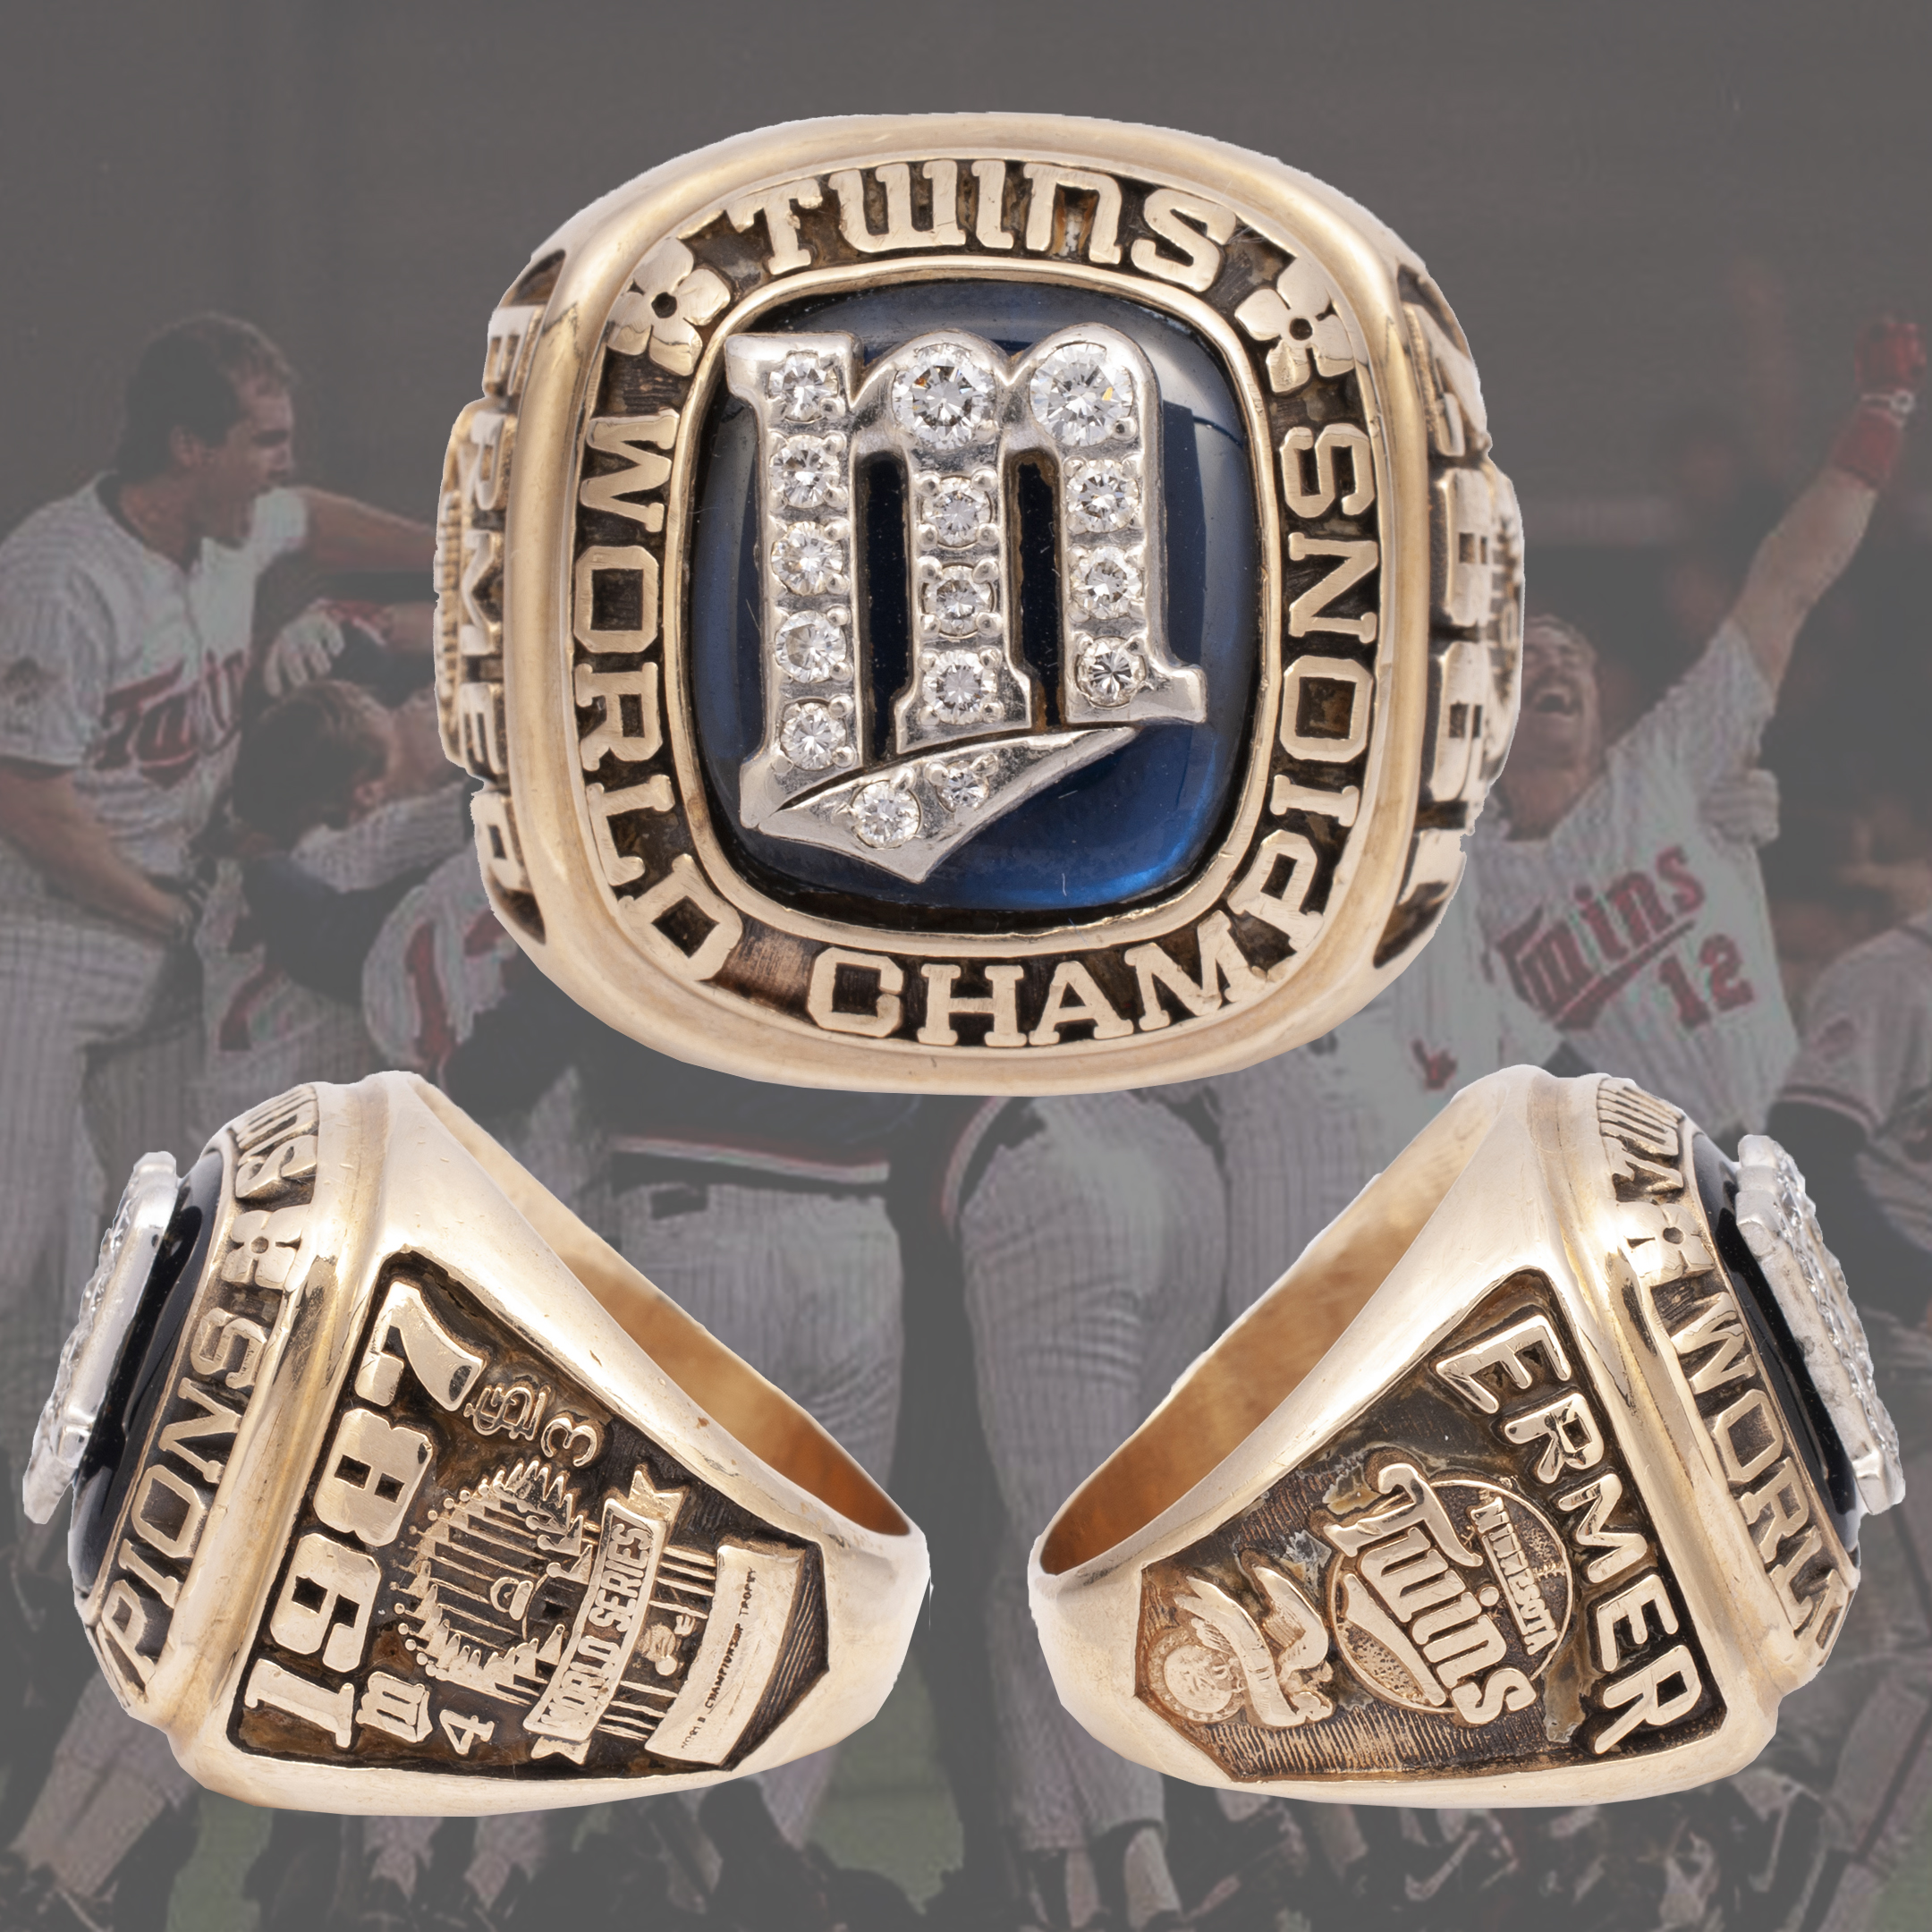 1987 Minnesota Twins World Series Championship Ring Presented to